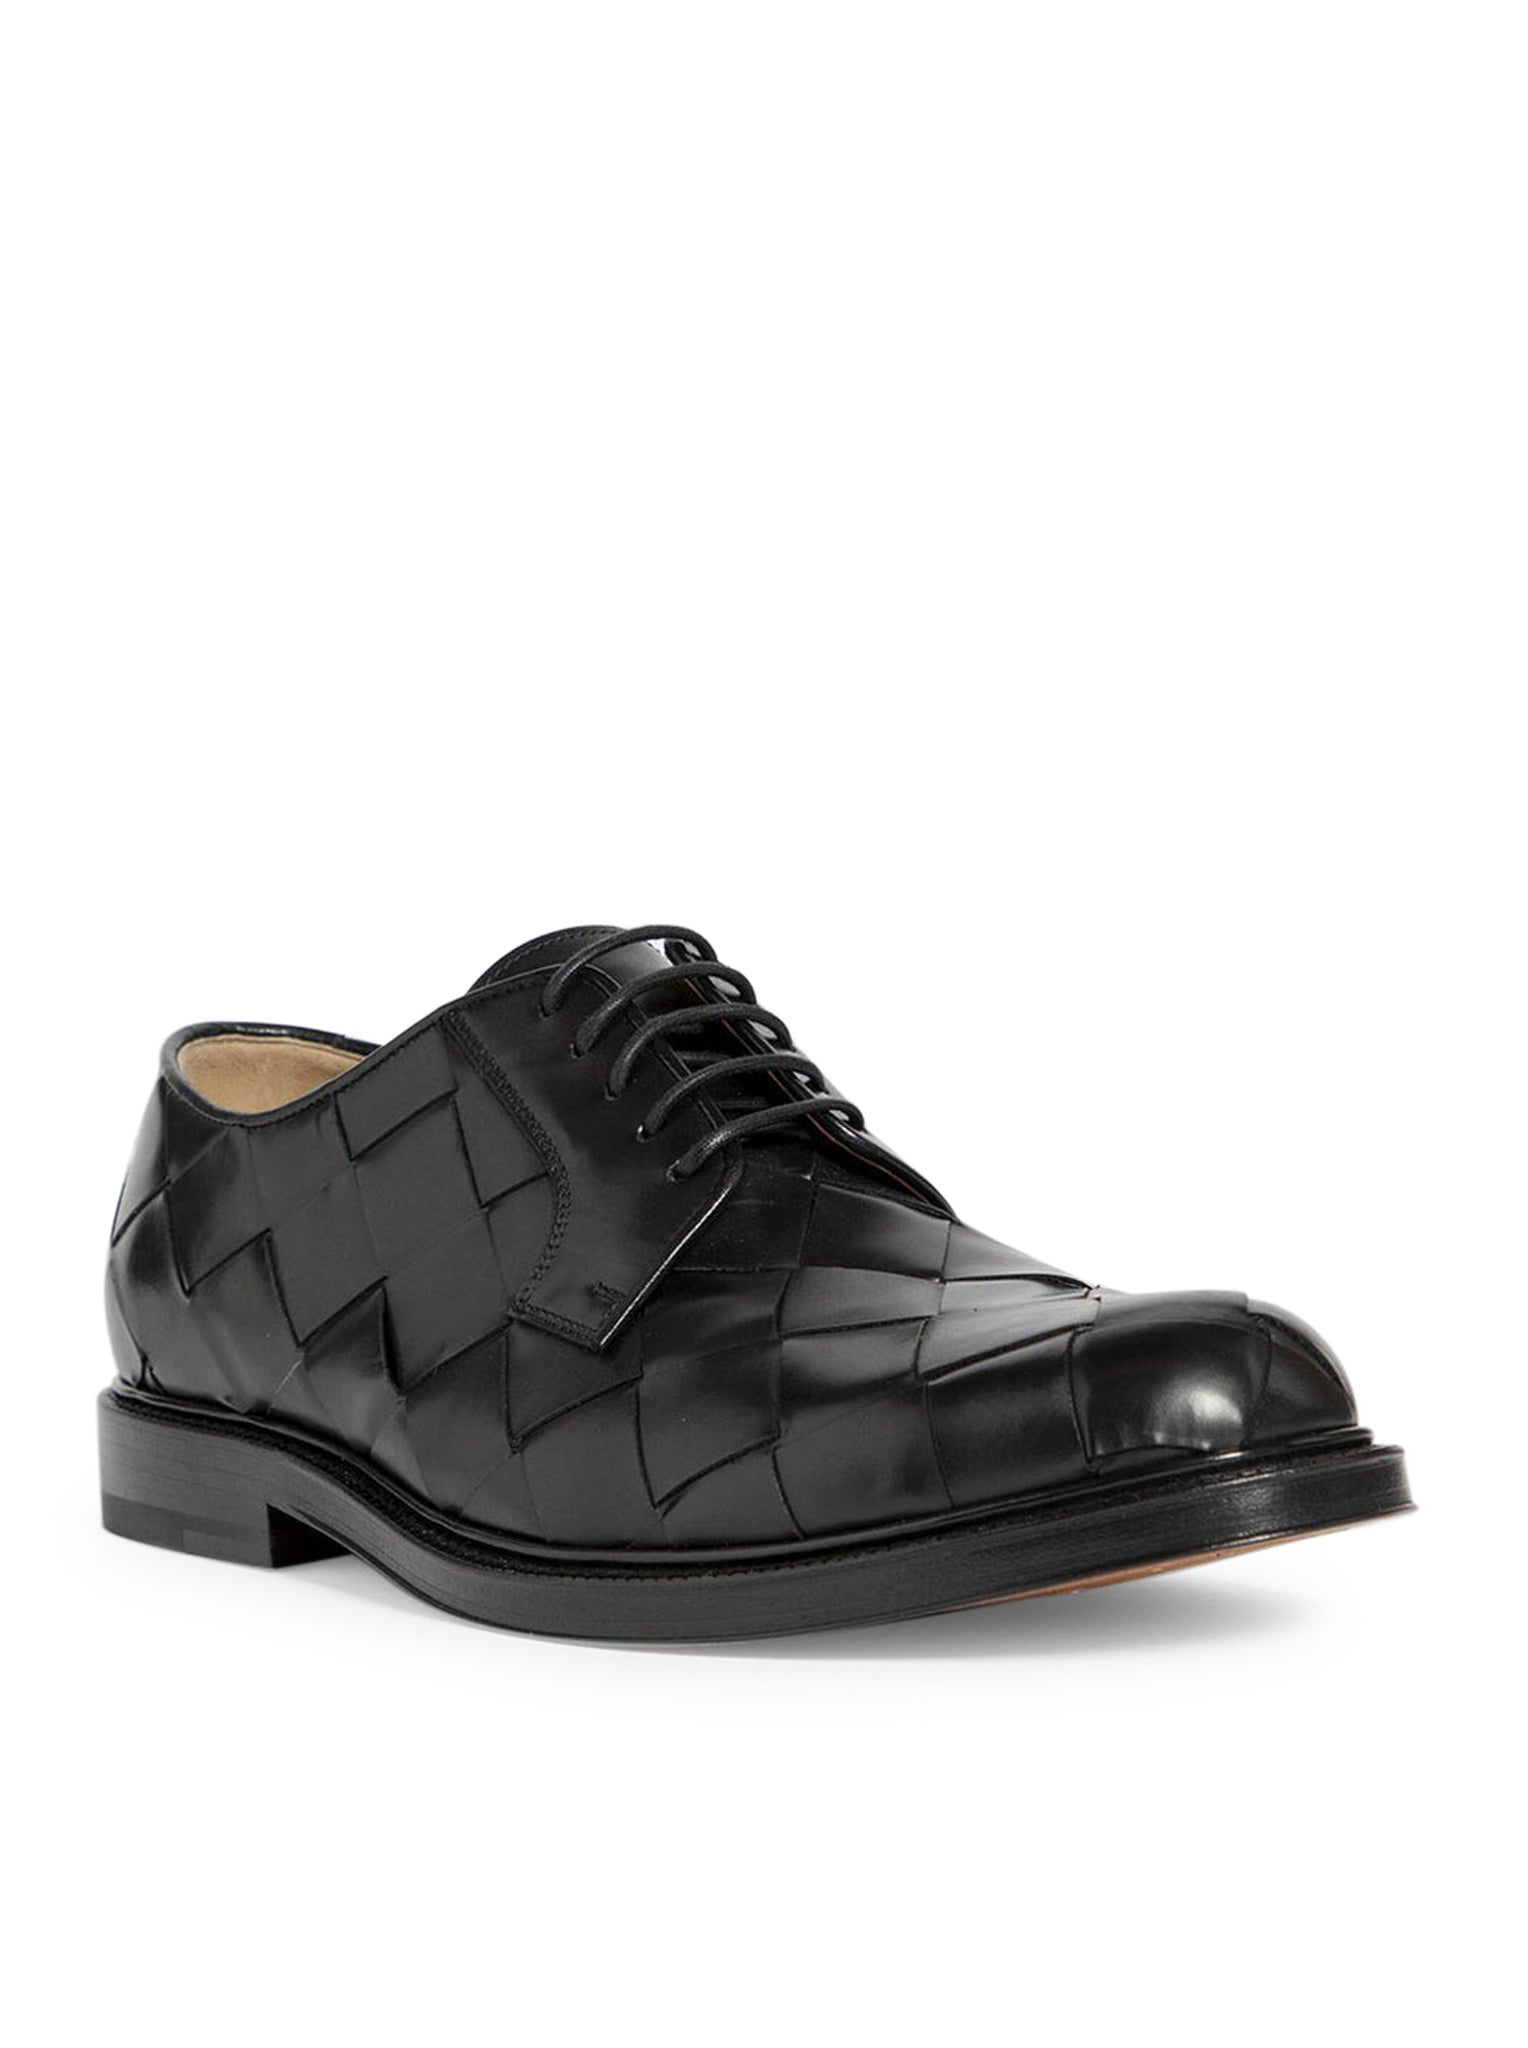 Bottega veneta men`s black woven leather lace-up shoes in classic calfskin